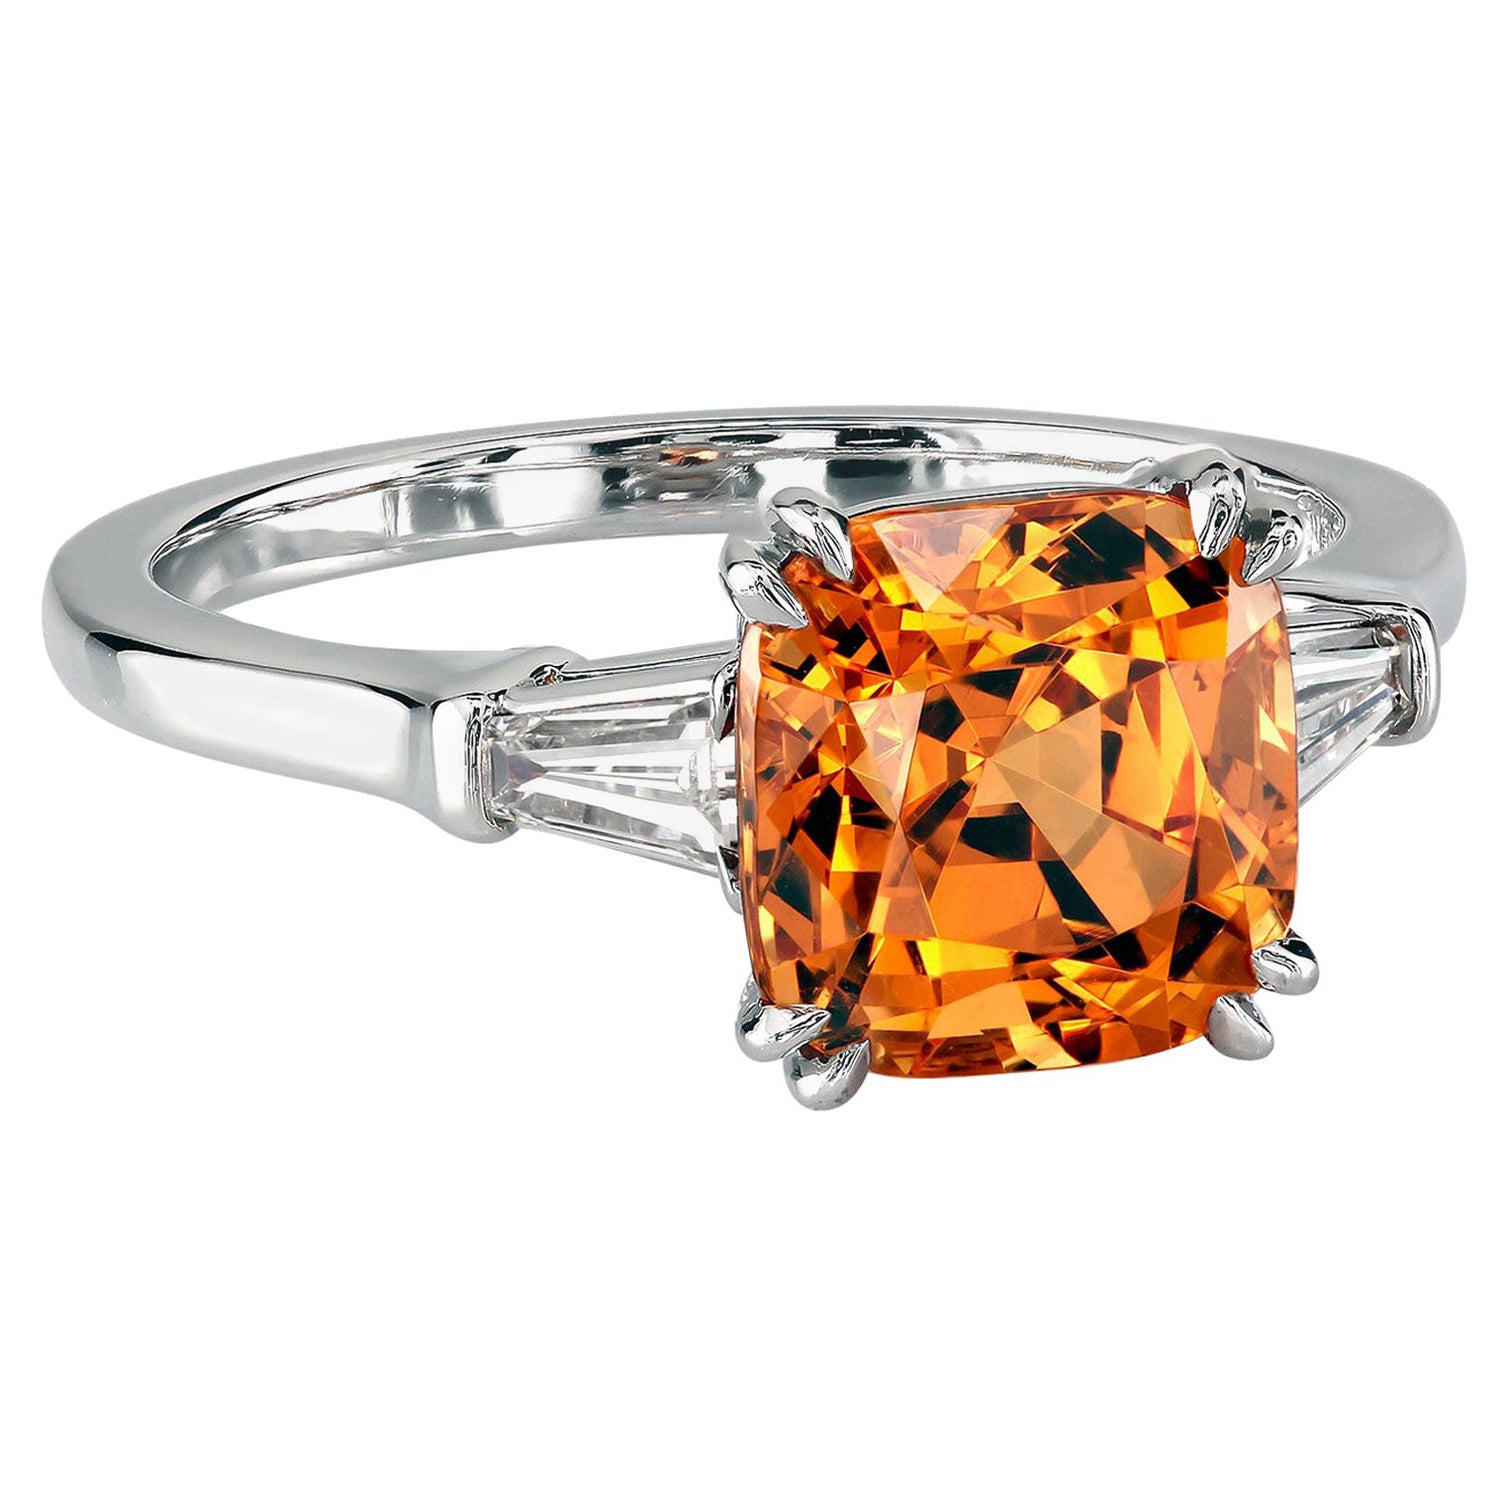 Leon Mege Platinum Three-Stone Ring with Mandarin Garnet and Diamond Baguettes